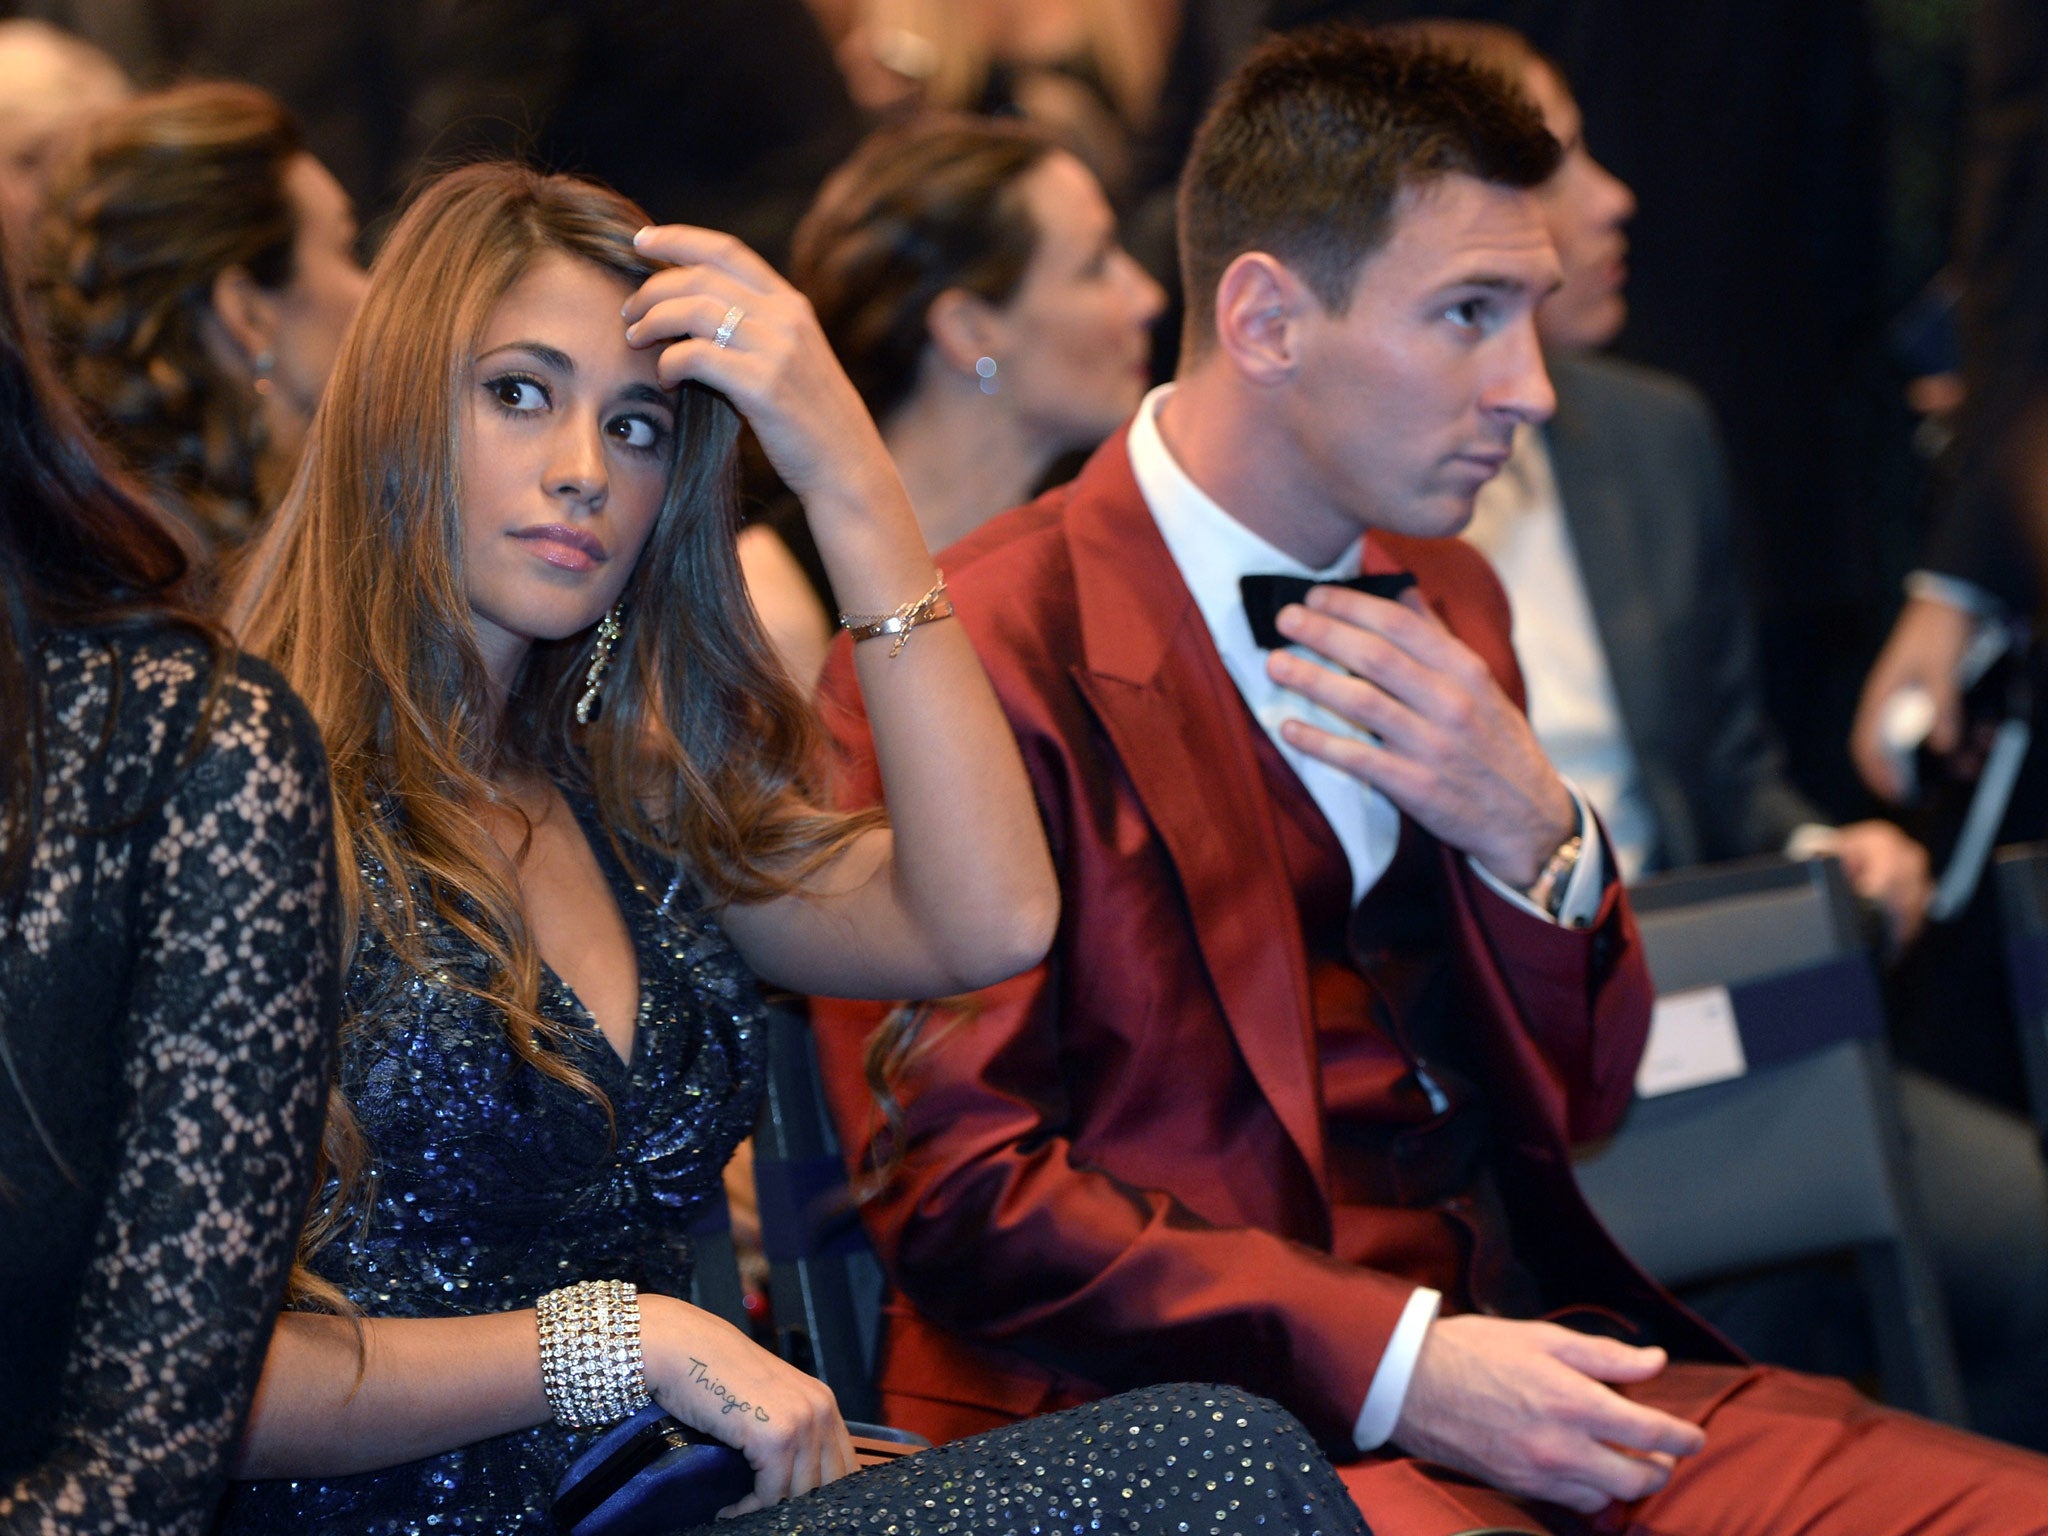 Messi and his partner Antonella Roccuzzo at the 2013 FIFA Ballon d'Or awards